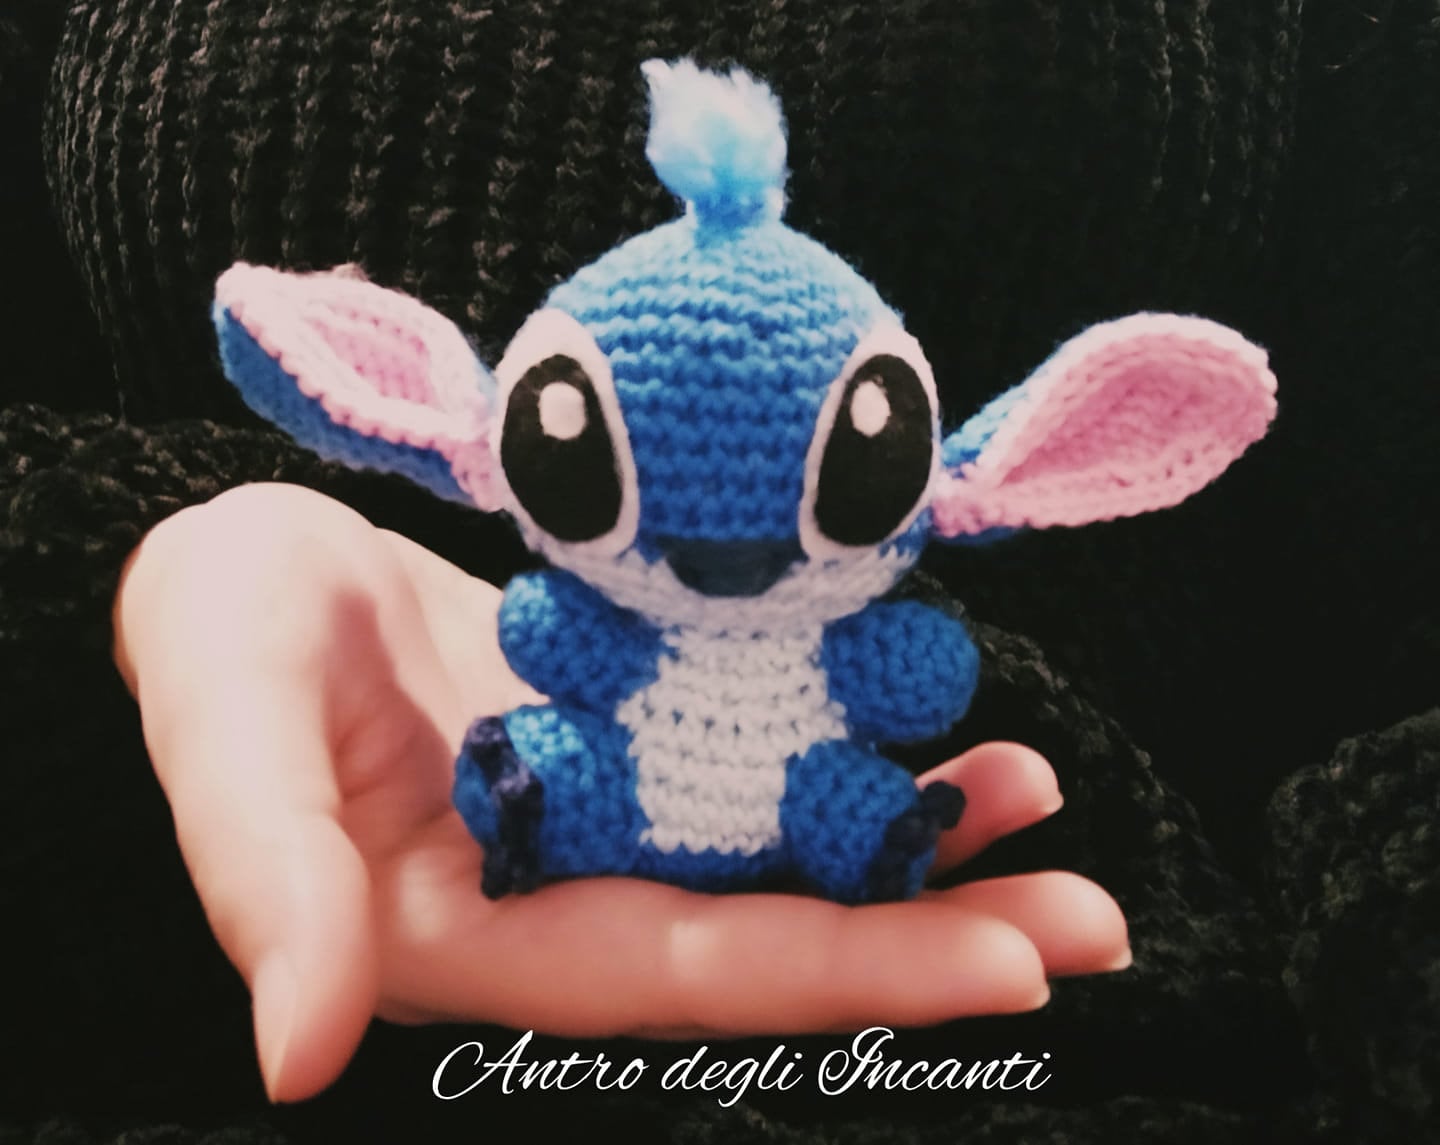 Peluche Stitch avec Doudou - Lilo & Stitch - Simba Toys - AmuKKoto